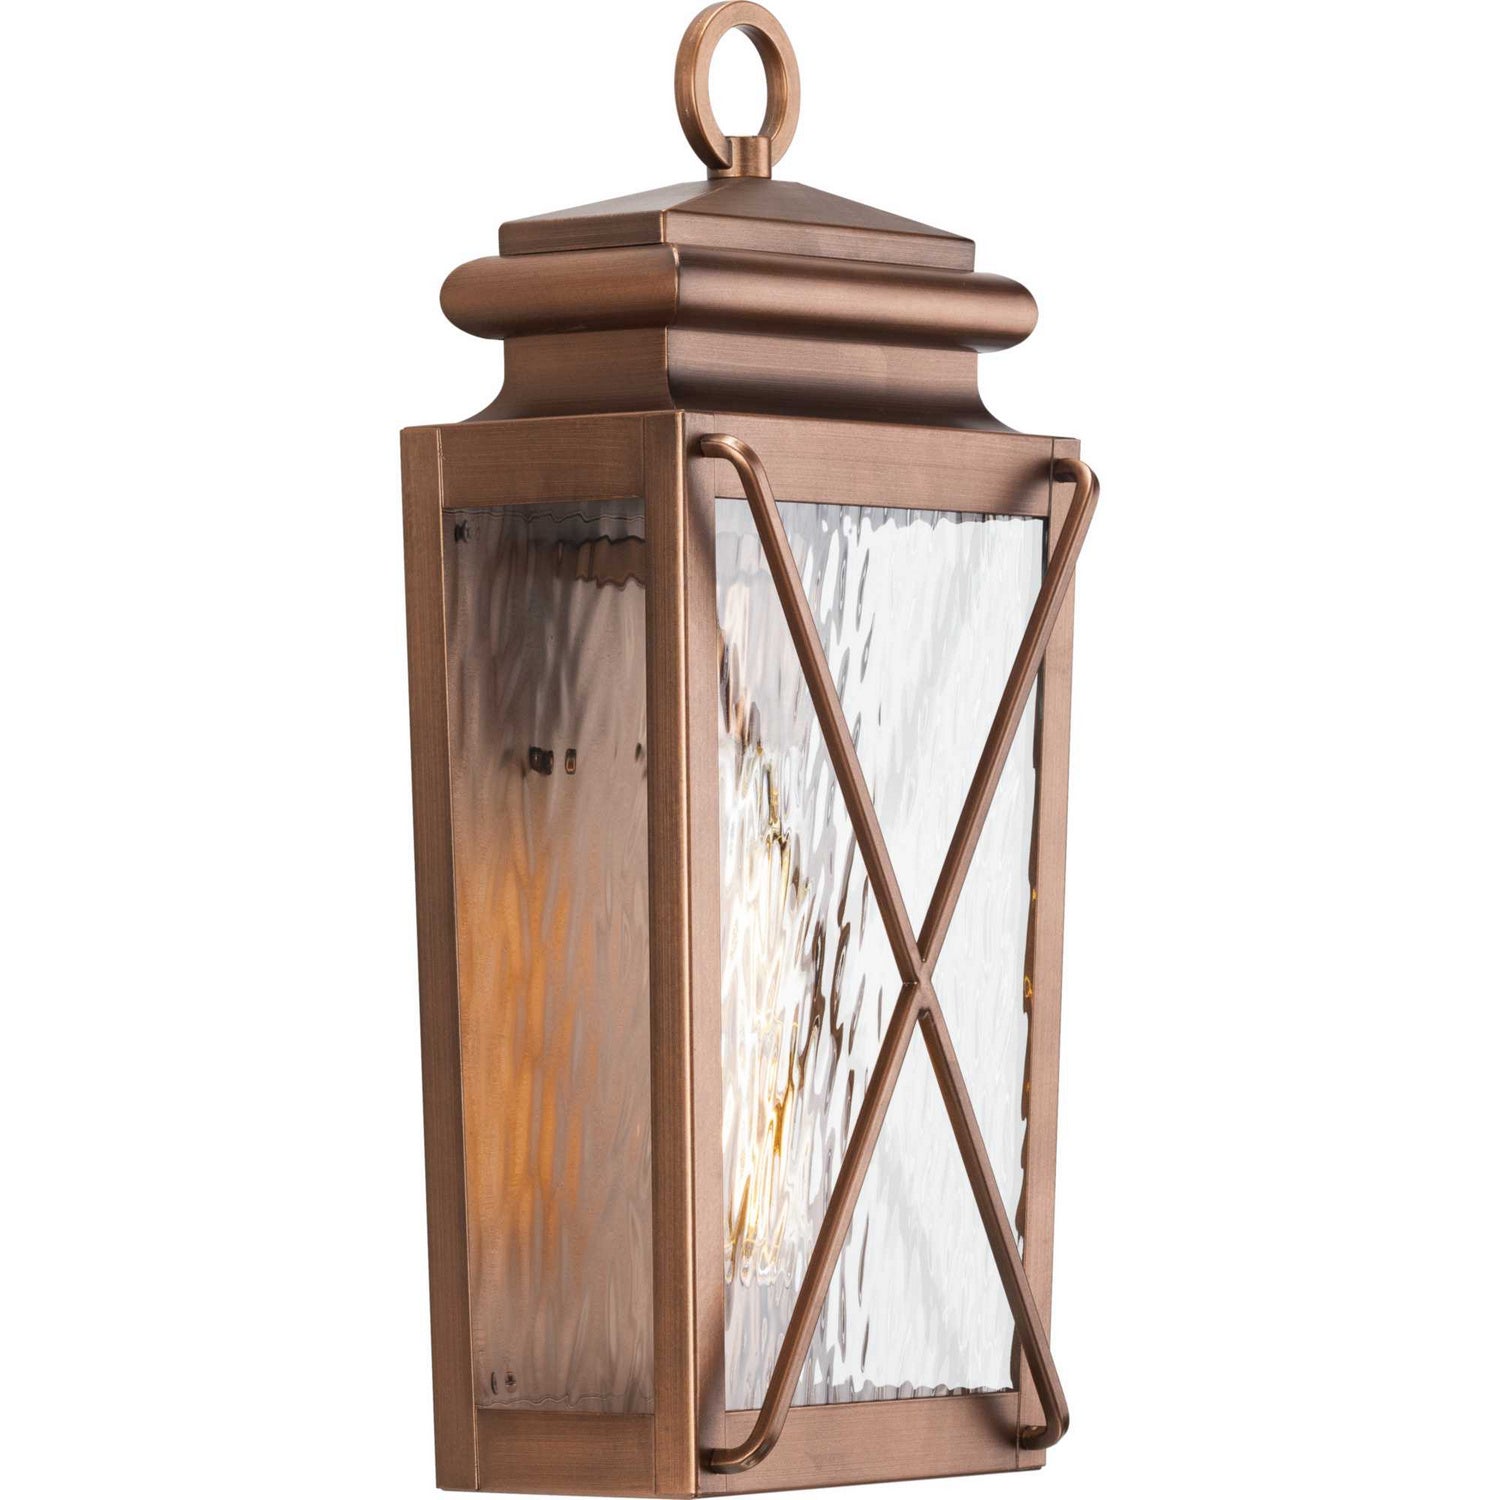 Progress Canada - One Light Wall Lantern - Wakeford - Antique Copper (Painted)- Union Lighting Luminaires Decor